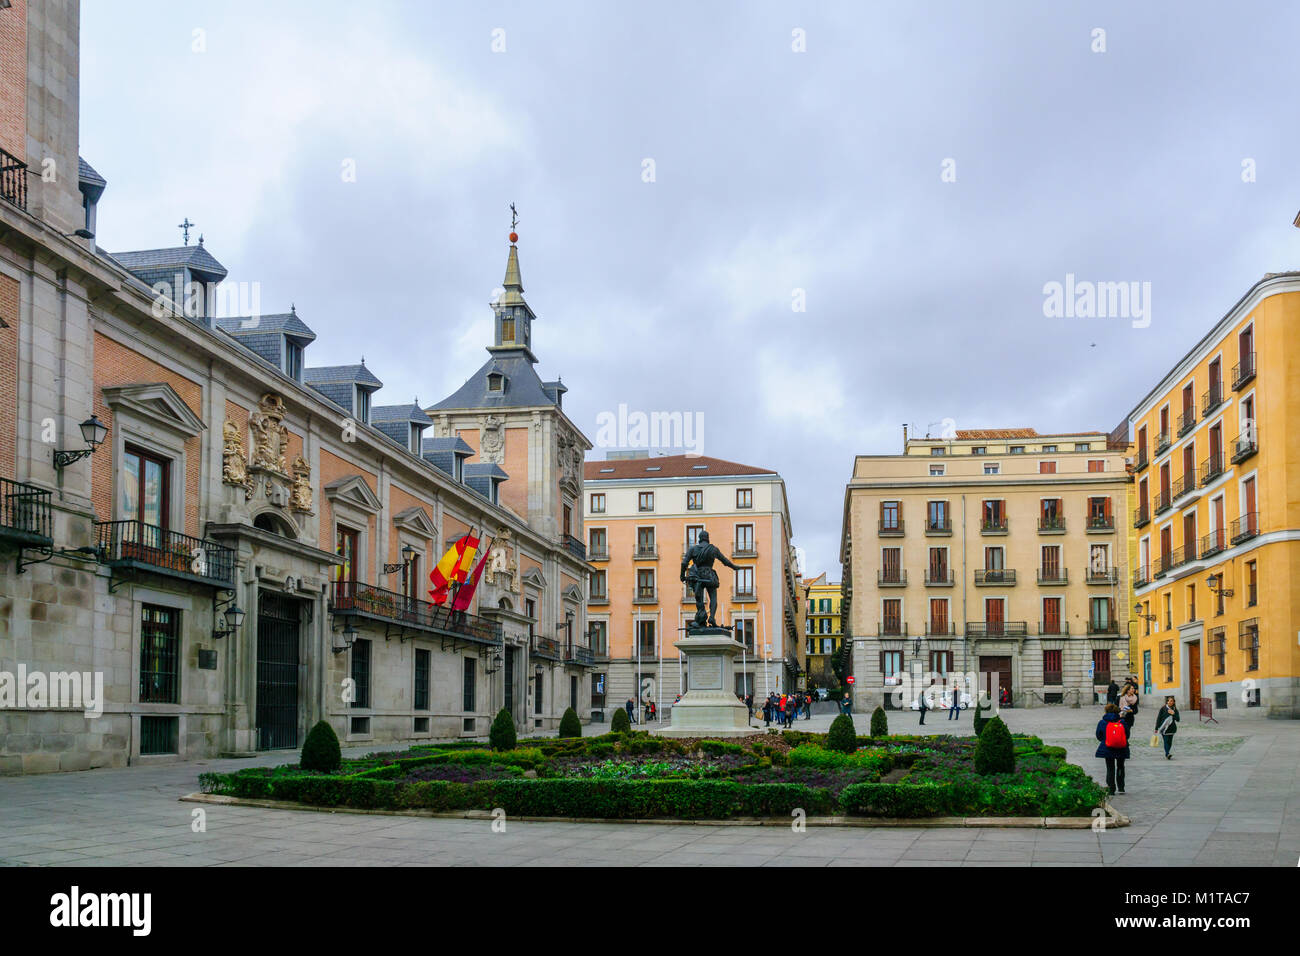 MADRID, SPAIN - DECEMBER 31, 2017: Scene of Plaza de la Villa, with locals and visitors, in Madrid, Spain Stock Photo